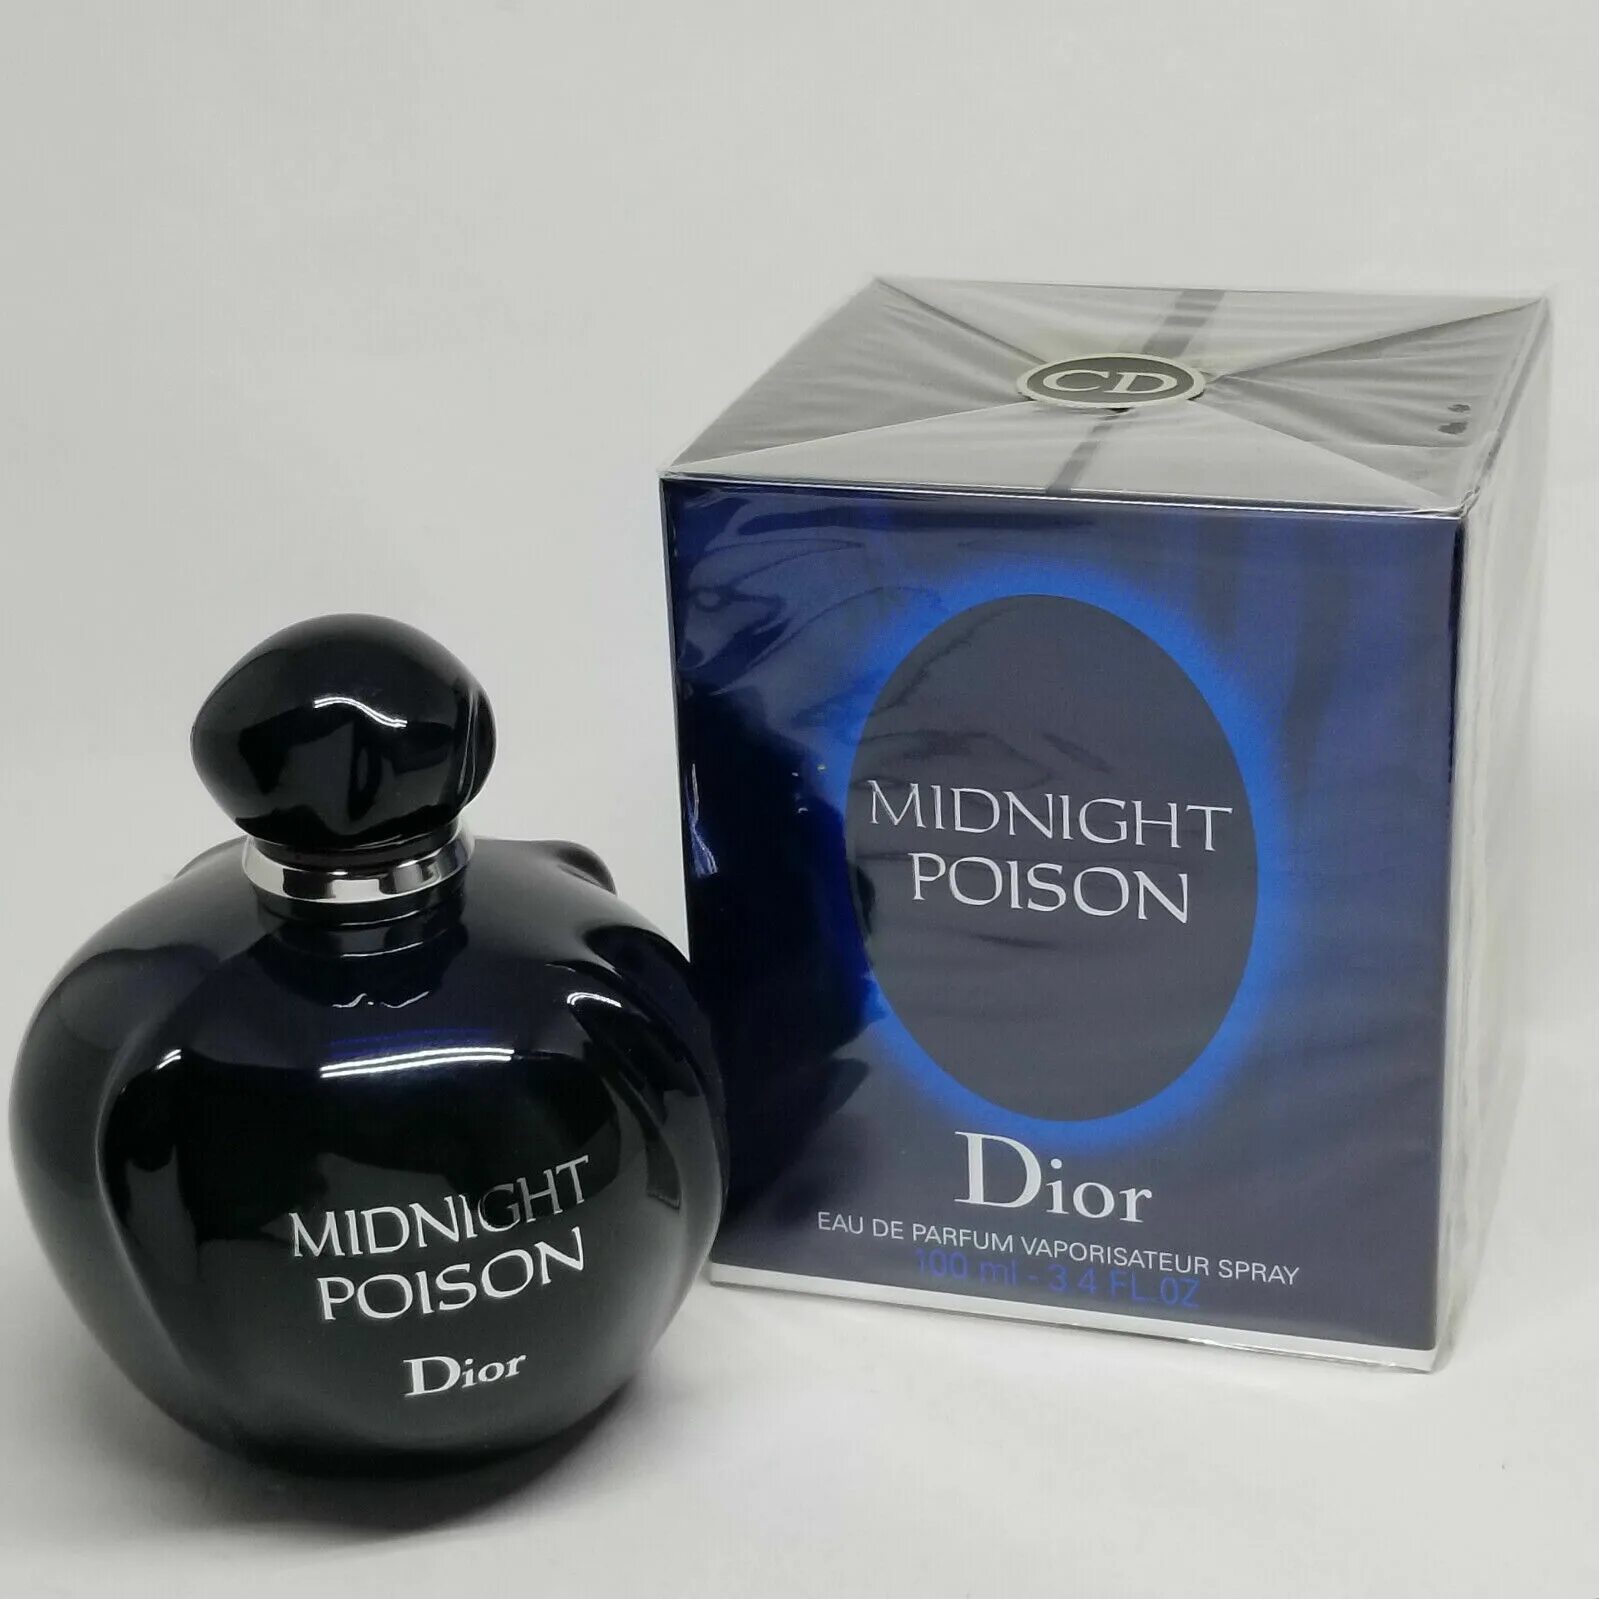 Миднайт пуазон. Диор Миднайт пуазон. Духи Midnight Poison. Dior Midnight Poison 100.